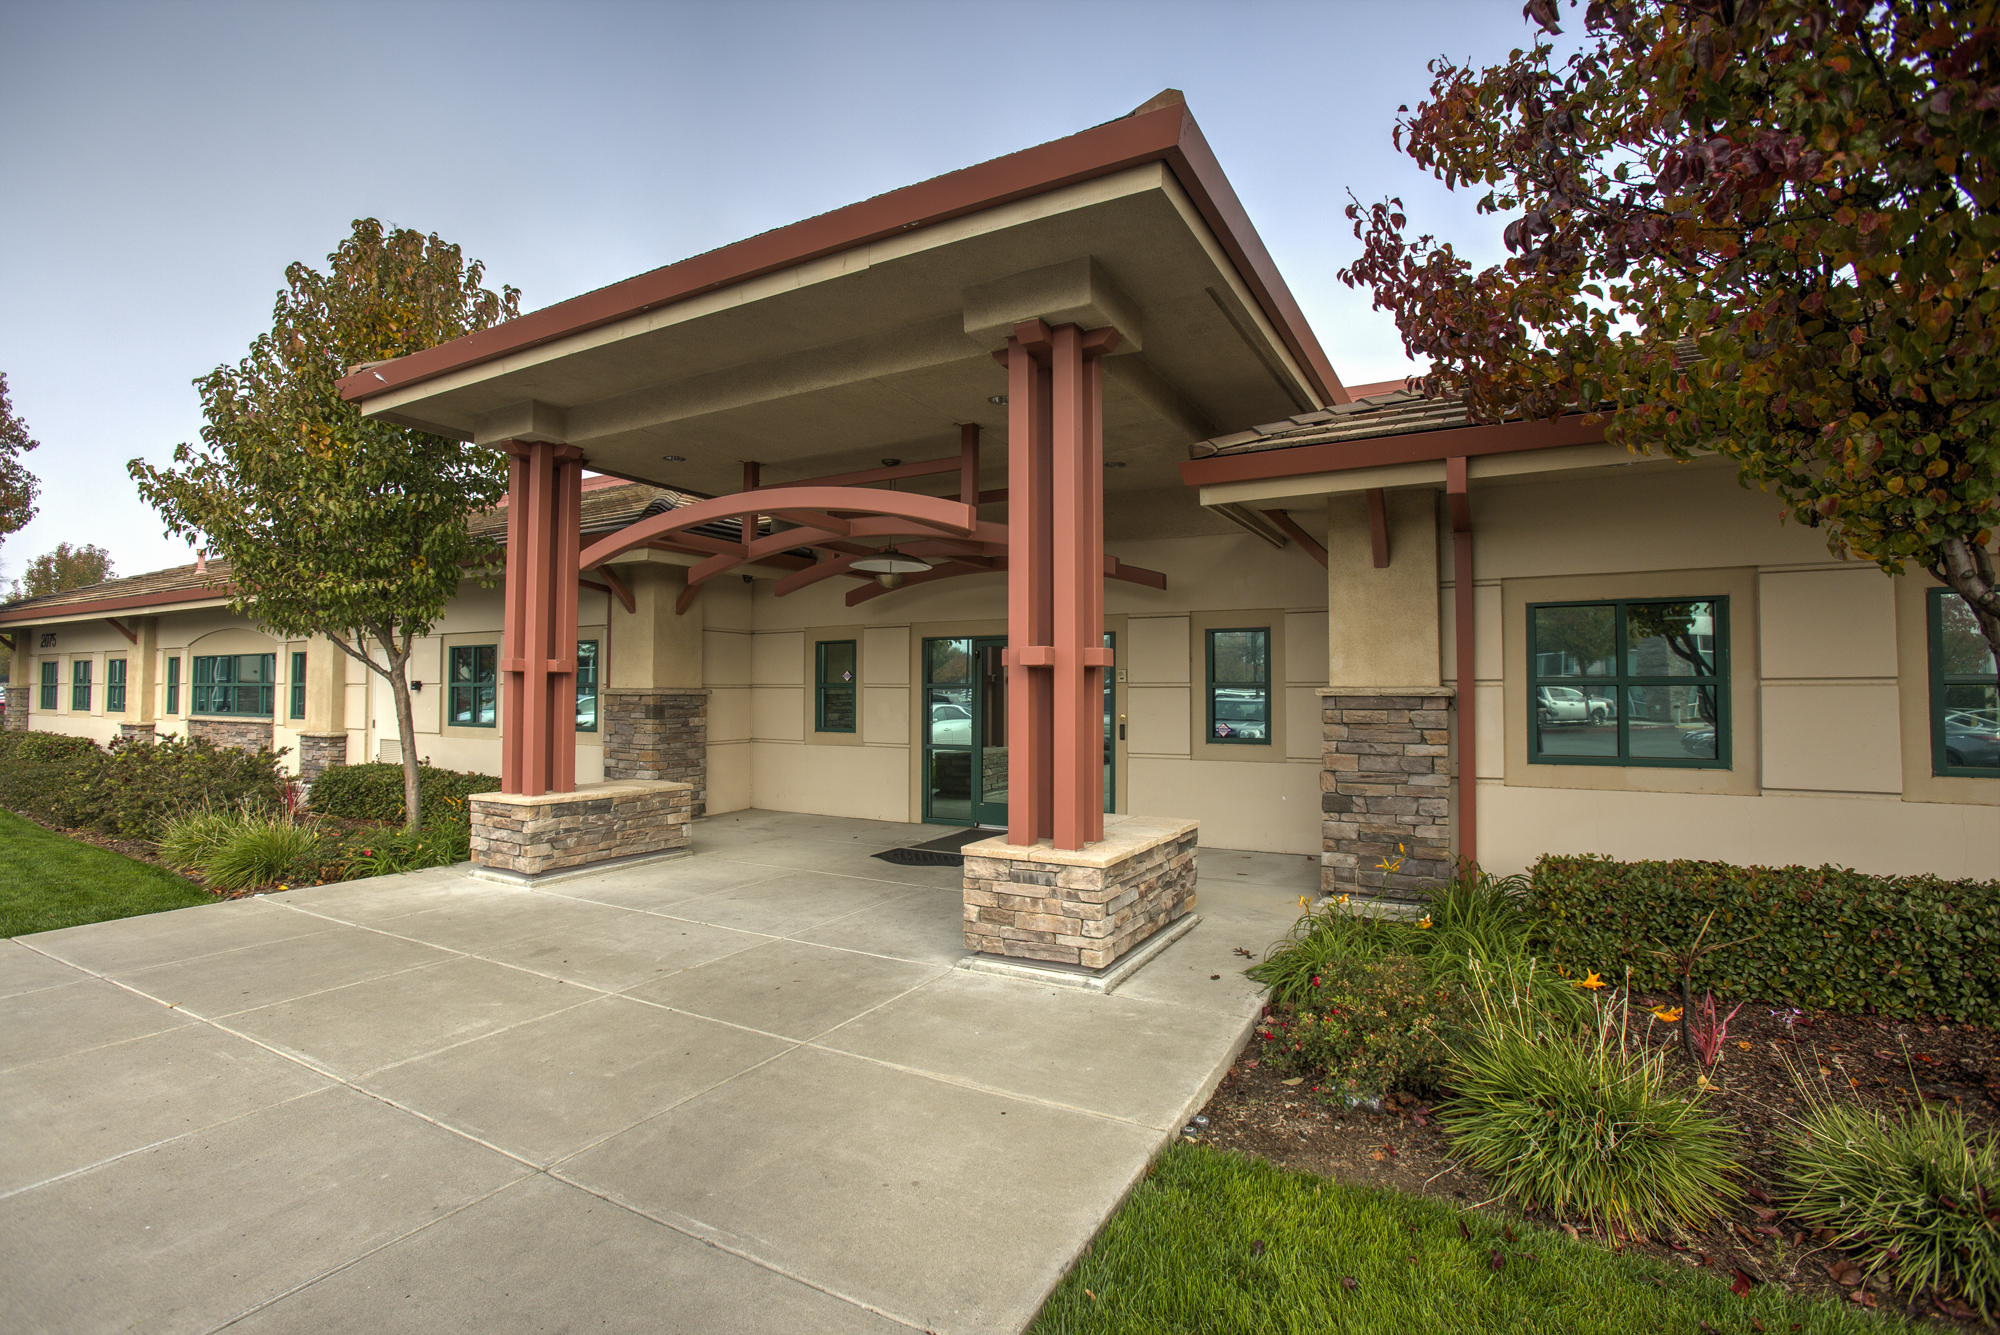 Little-Blossom-Montessori-Preschool-and-Daycare-Services-Sacramento-Natomas_07.jpg